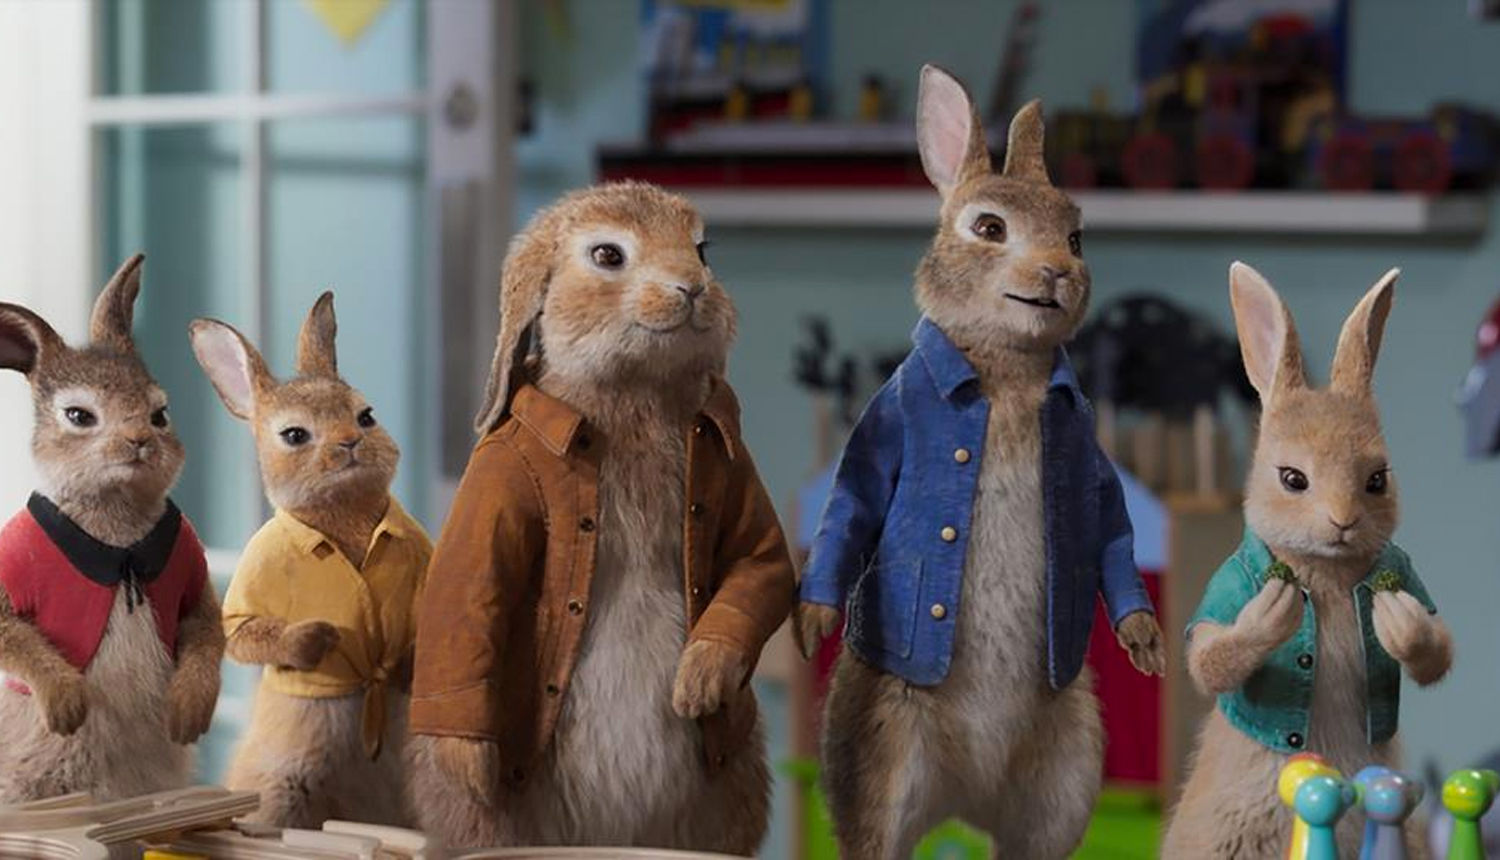 Peter Rabbit Family Fun Day - The East Lancashire Railway